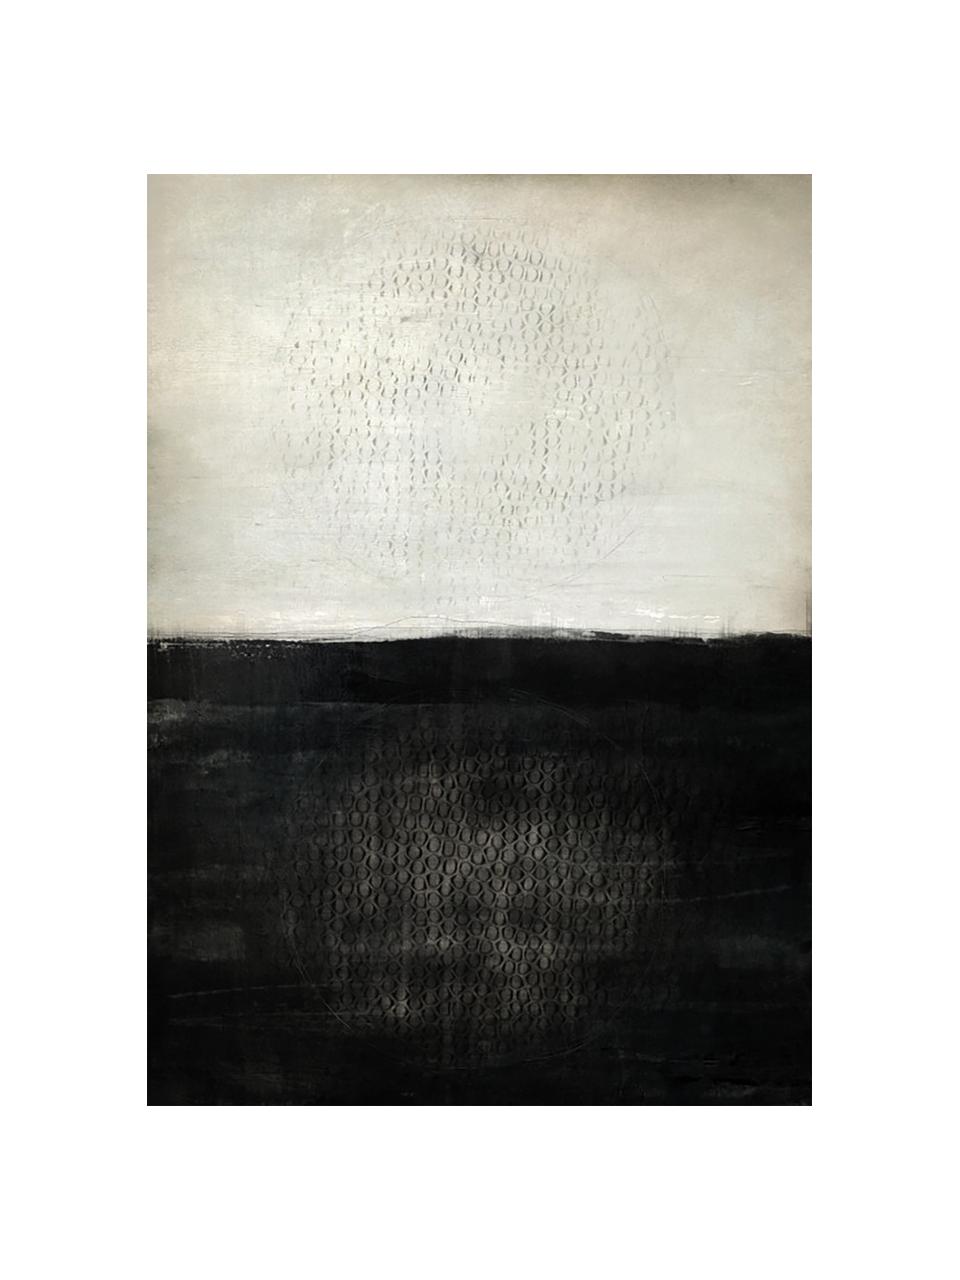 Tištěný malovaný obraz na plátně Energie, Bílá, černá, Š 100 cm, V 140 cm